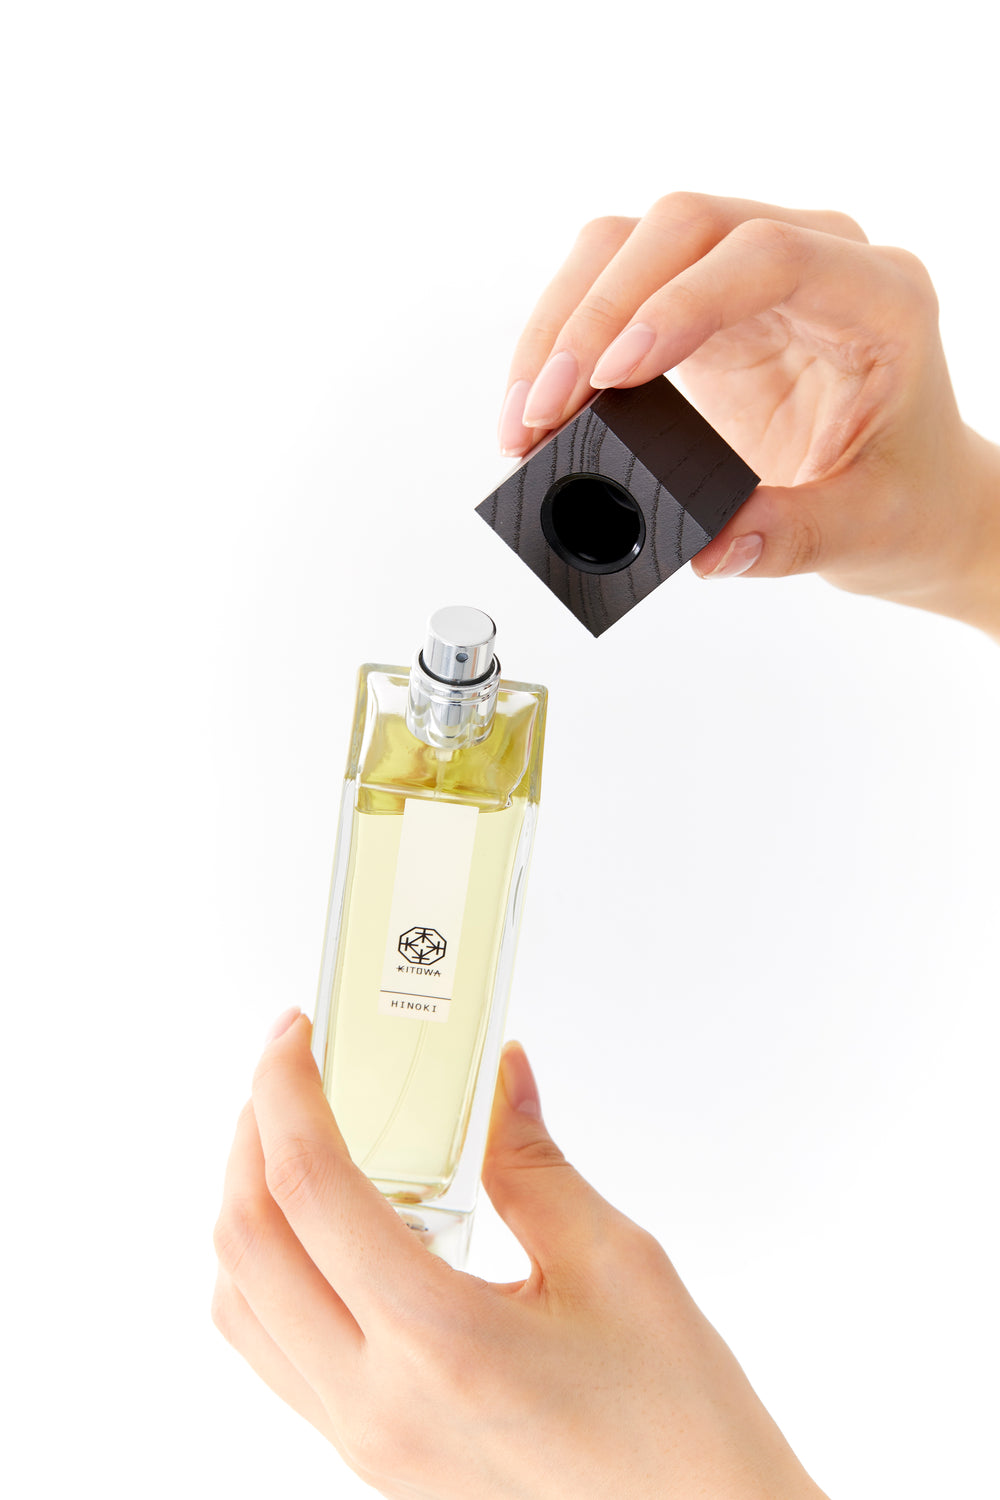 KITOWA Refresher Mist HIBA | Normcore Fragrance